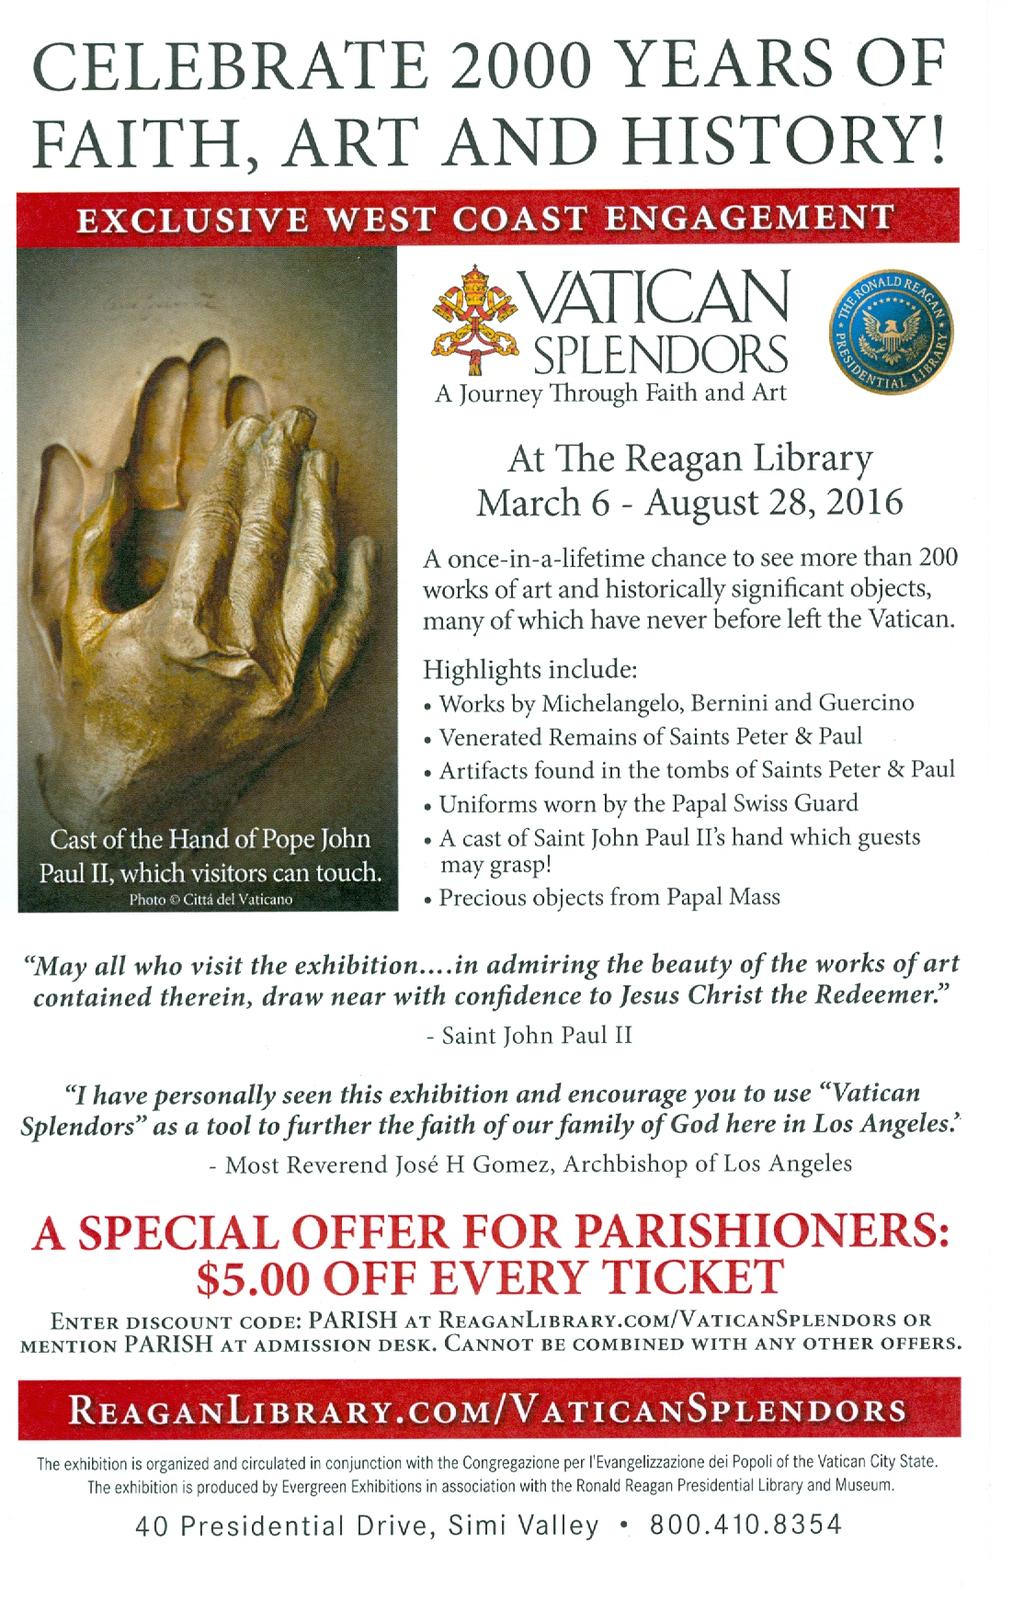 Mass on Sunday, April 24, 2016 at